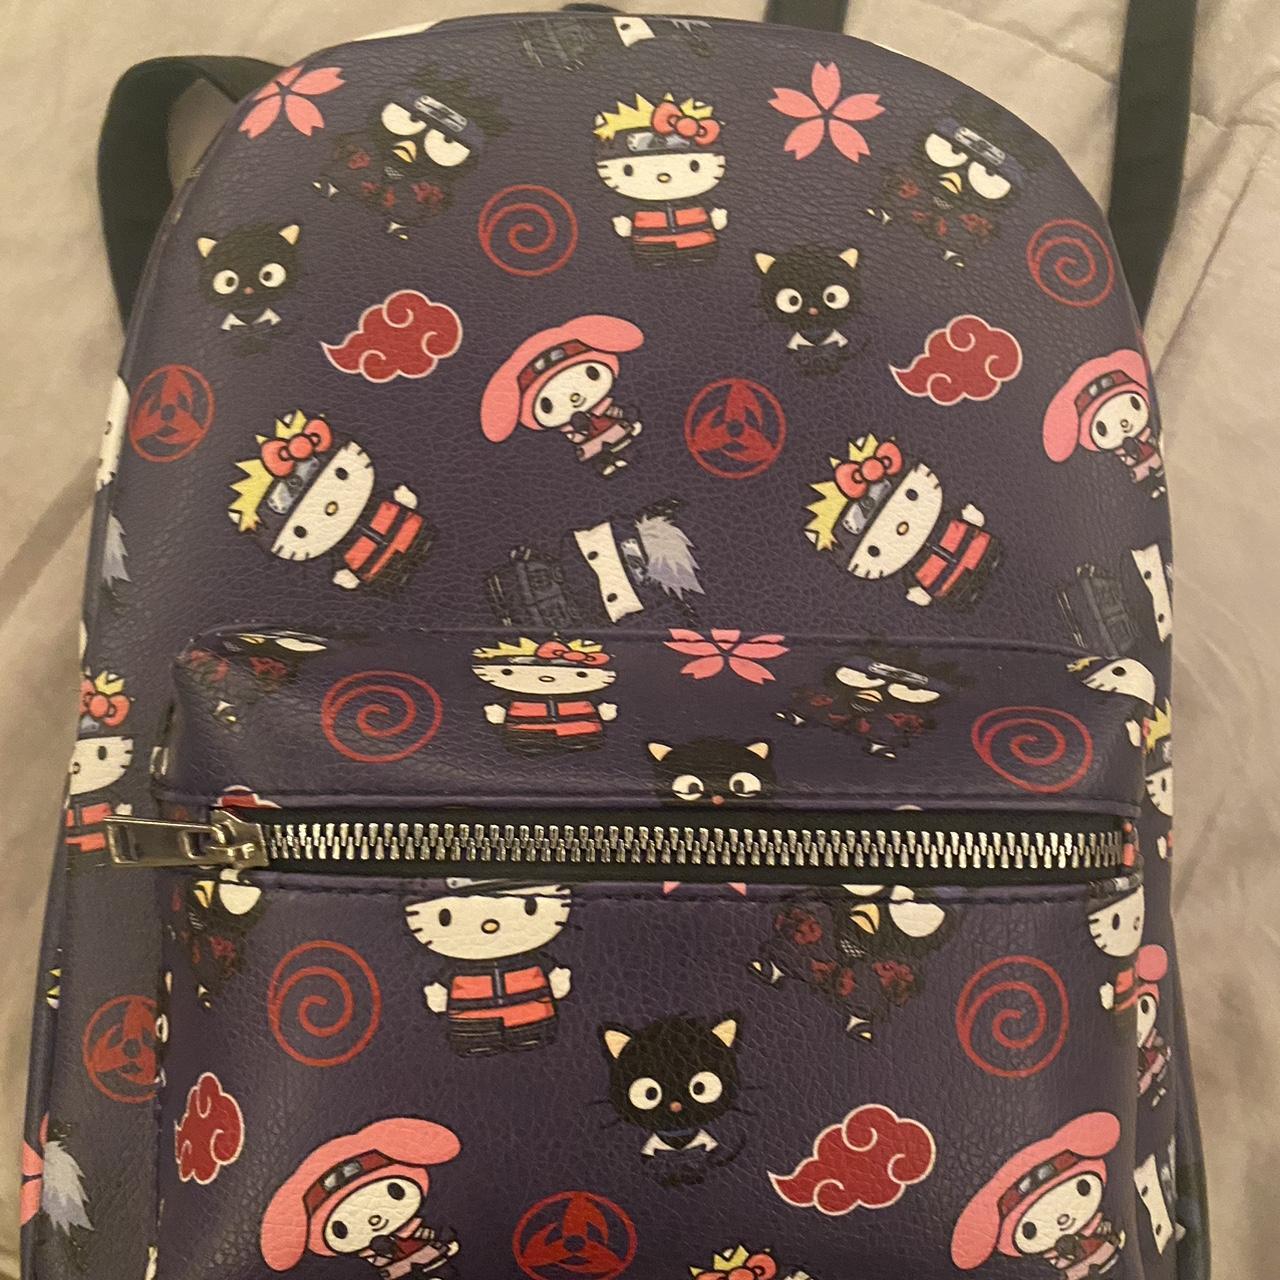 Hot Topic Naruto x Hello Kitty blue mini backpack - Depop